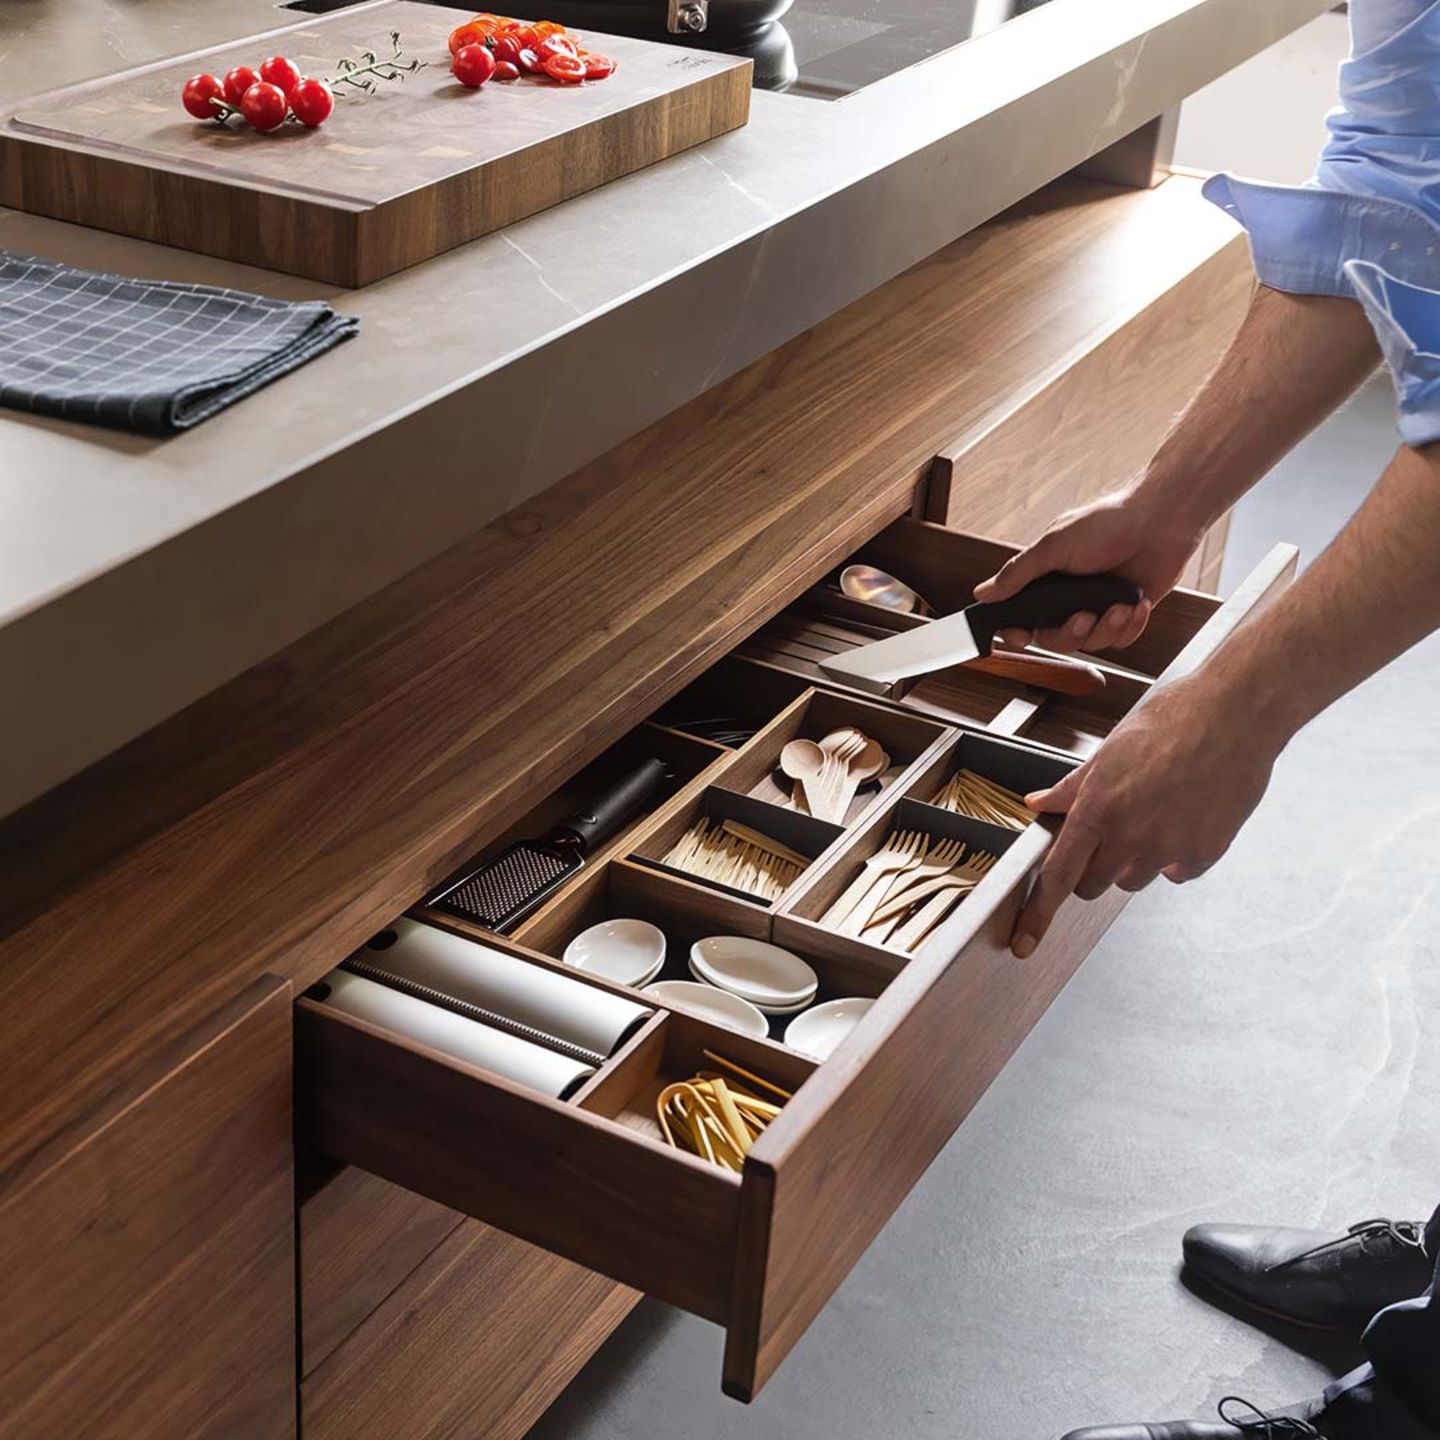 k7 kitchen island with drawer with practical interior organisation